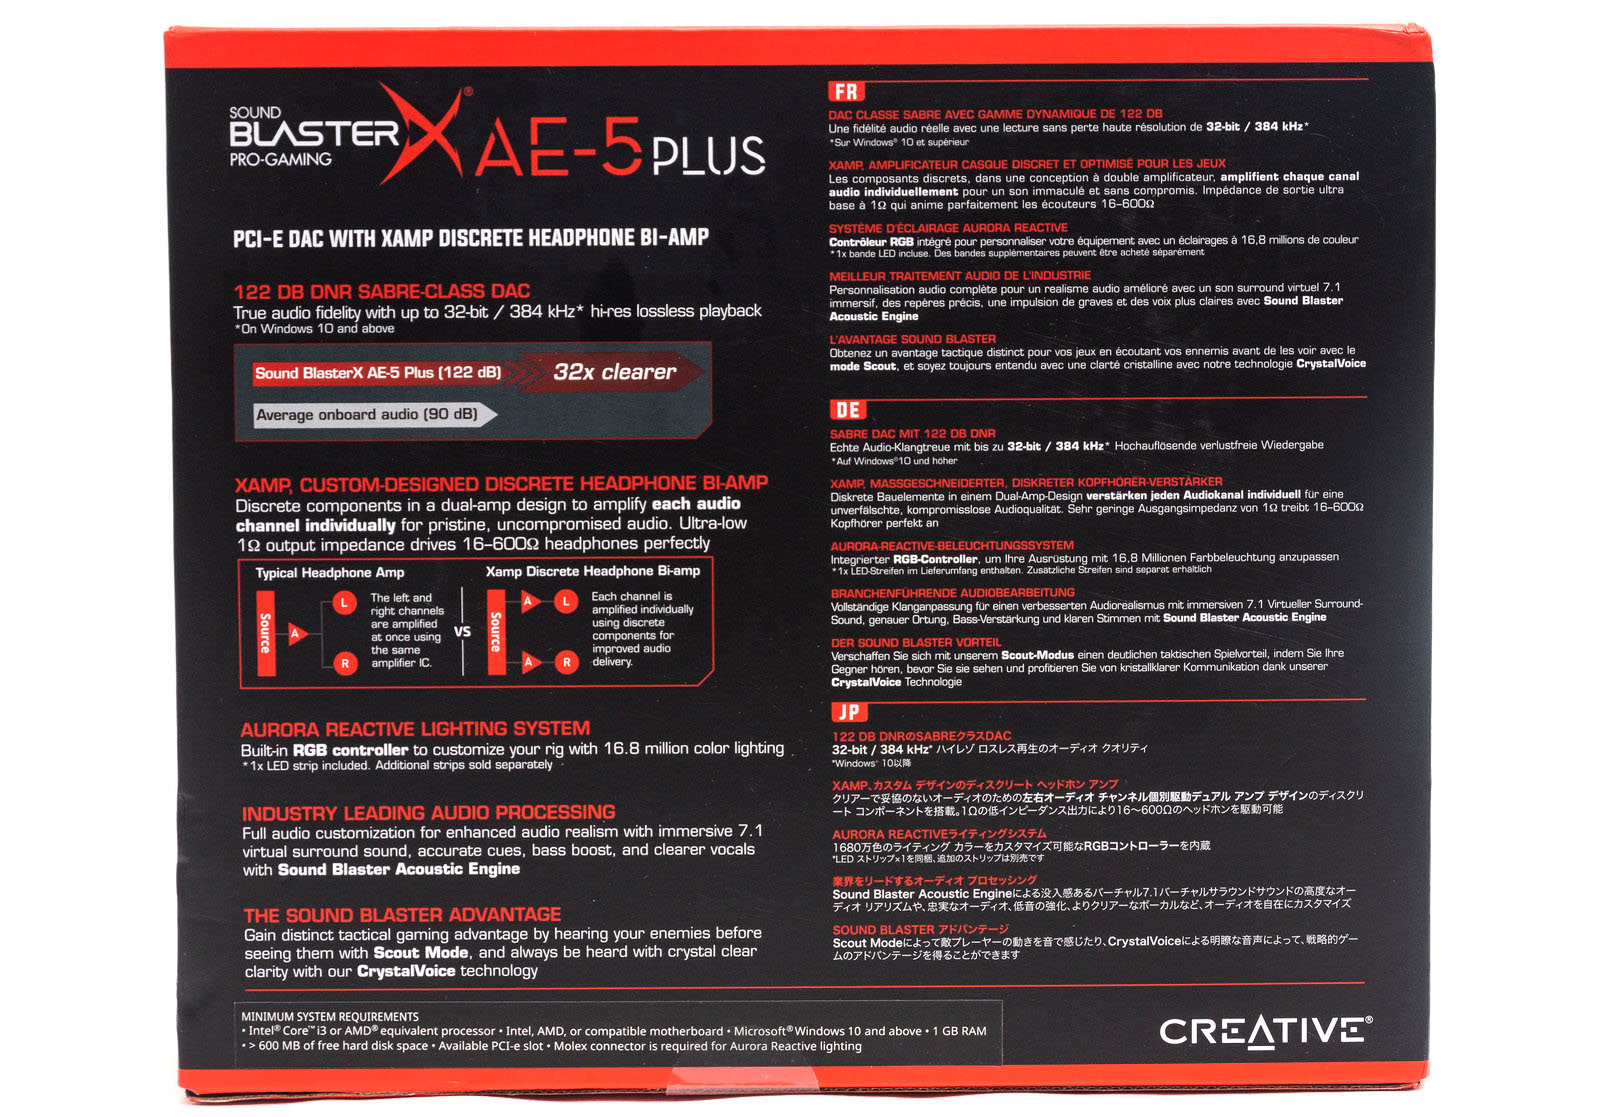 Creative blaster ae 5 plus. Creative Sound Blaster AE-5. Creative Sound Blaster AE-5 Plus. Creative Sound Blaster x AE-5 Plus. Звуковая карта Creative Sound Blaster AE 5 Plus.